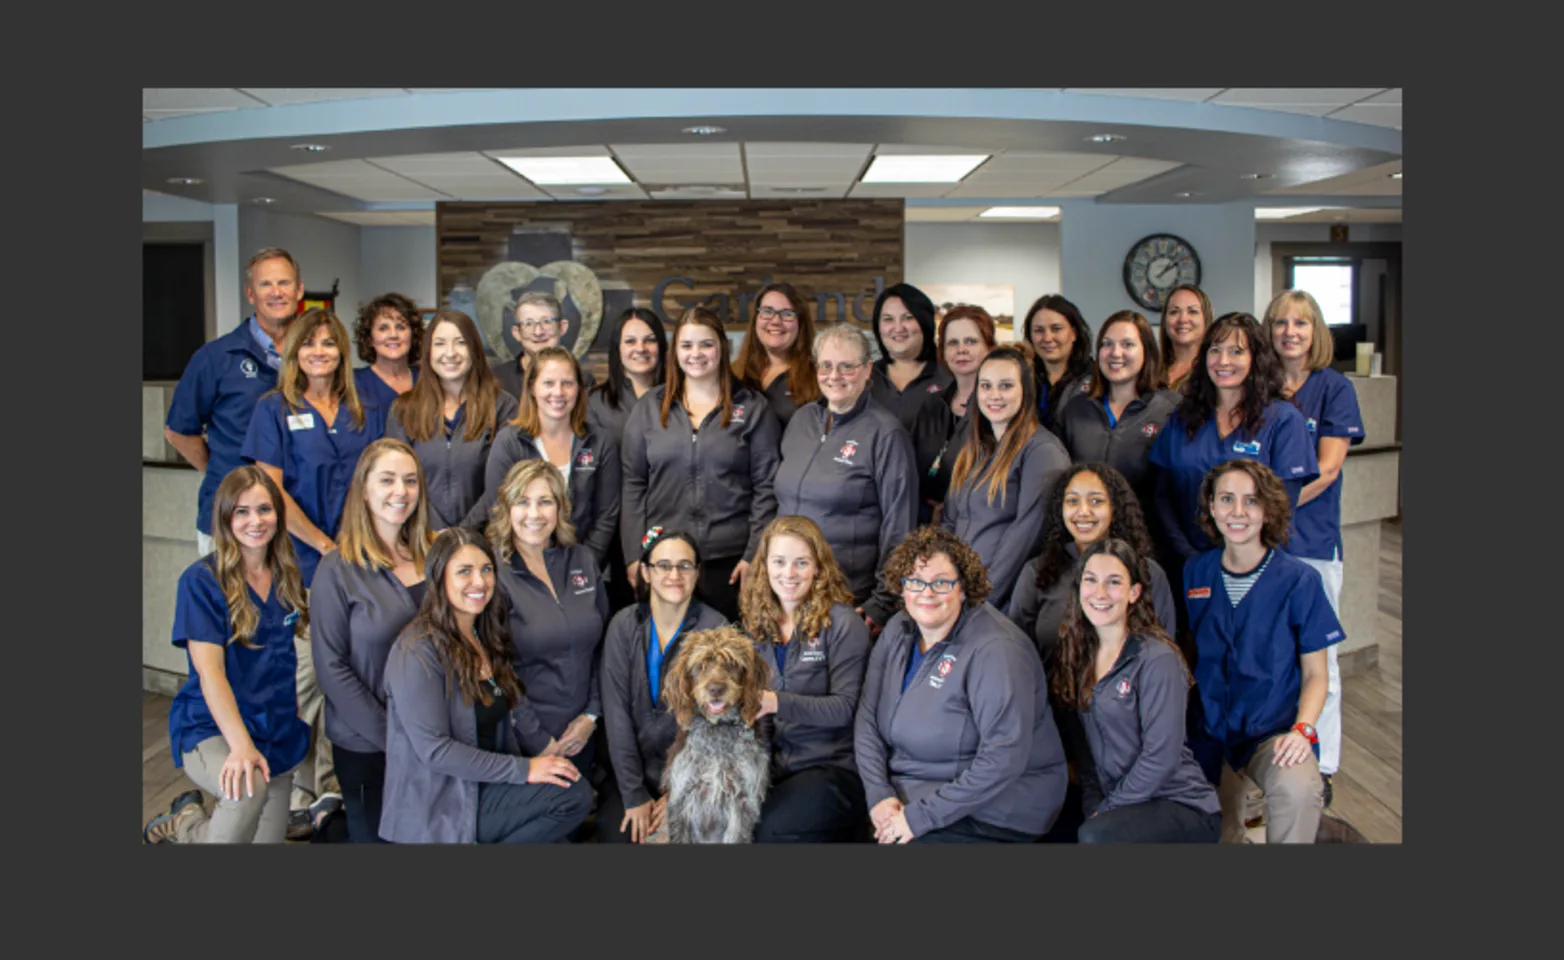 Garland Animal Clinic's staff, group photo.